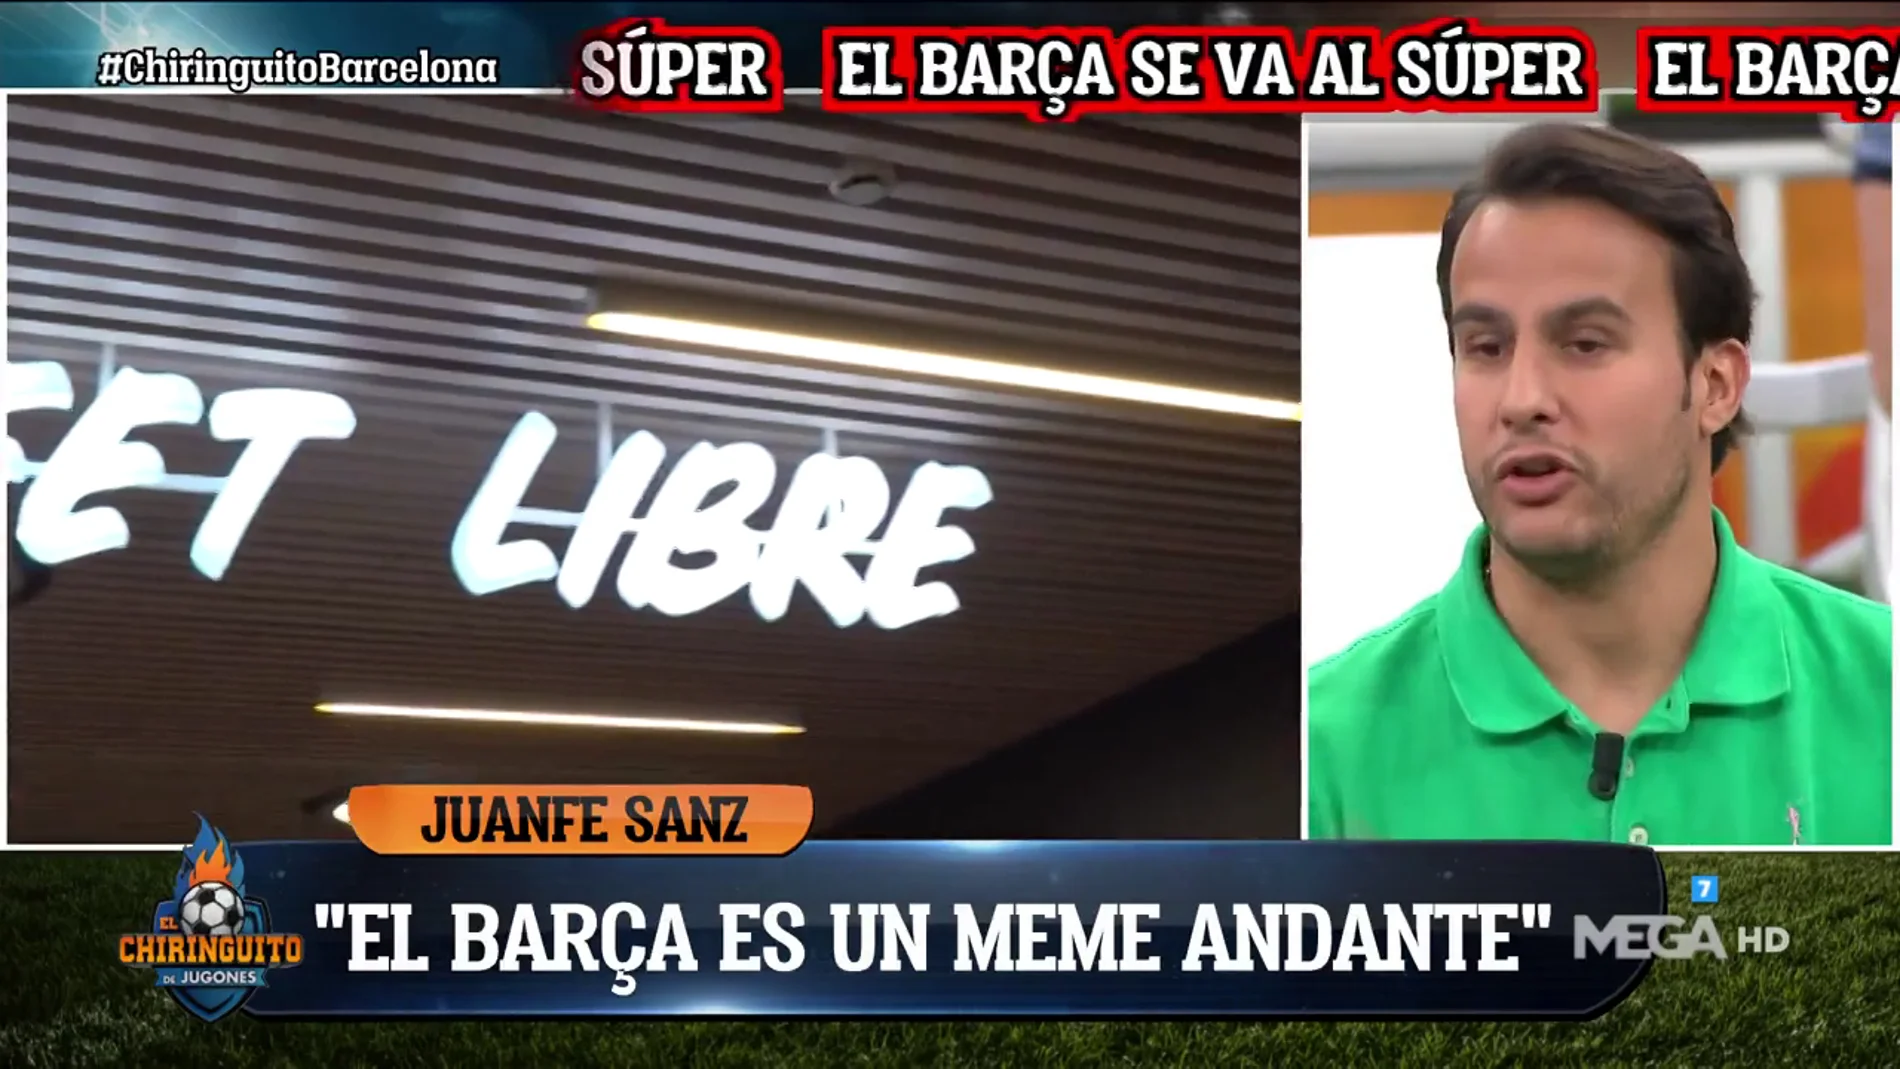 Juanfe Sanz: "El Barça es un meme andante"